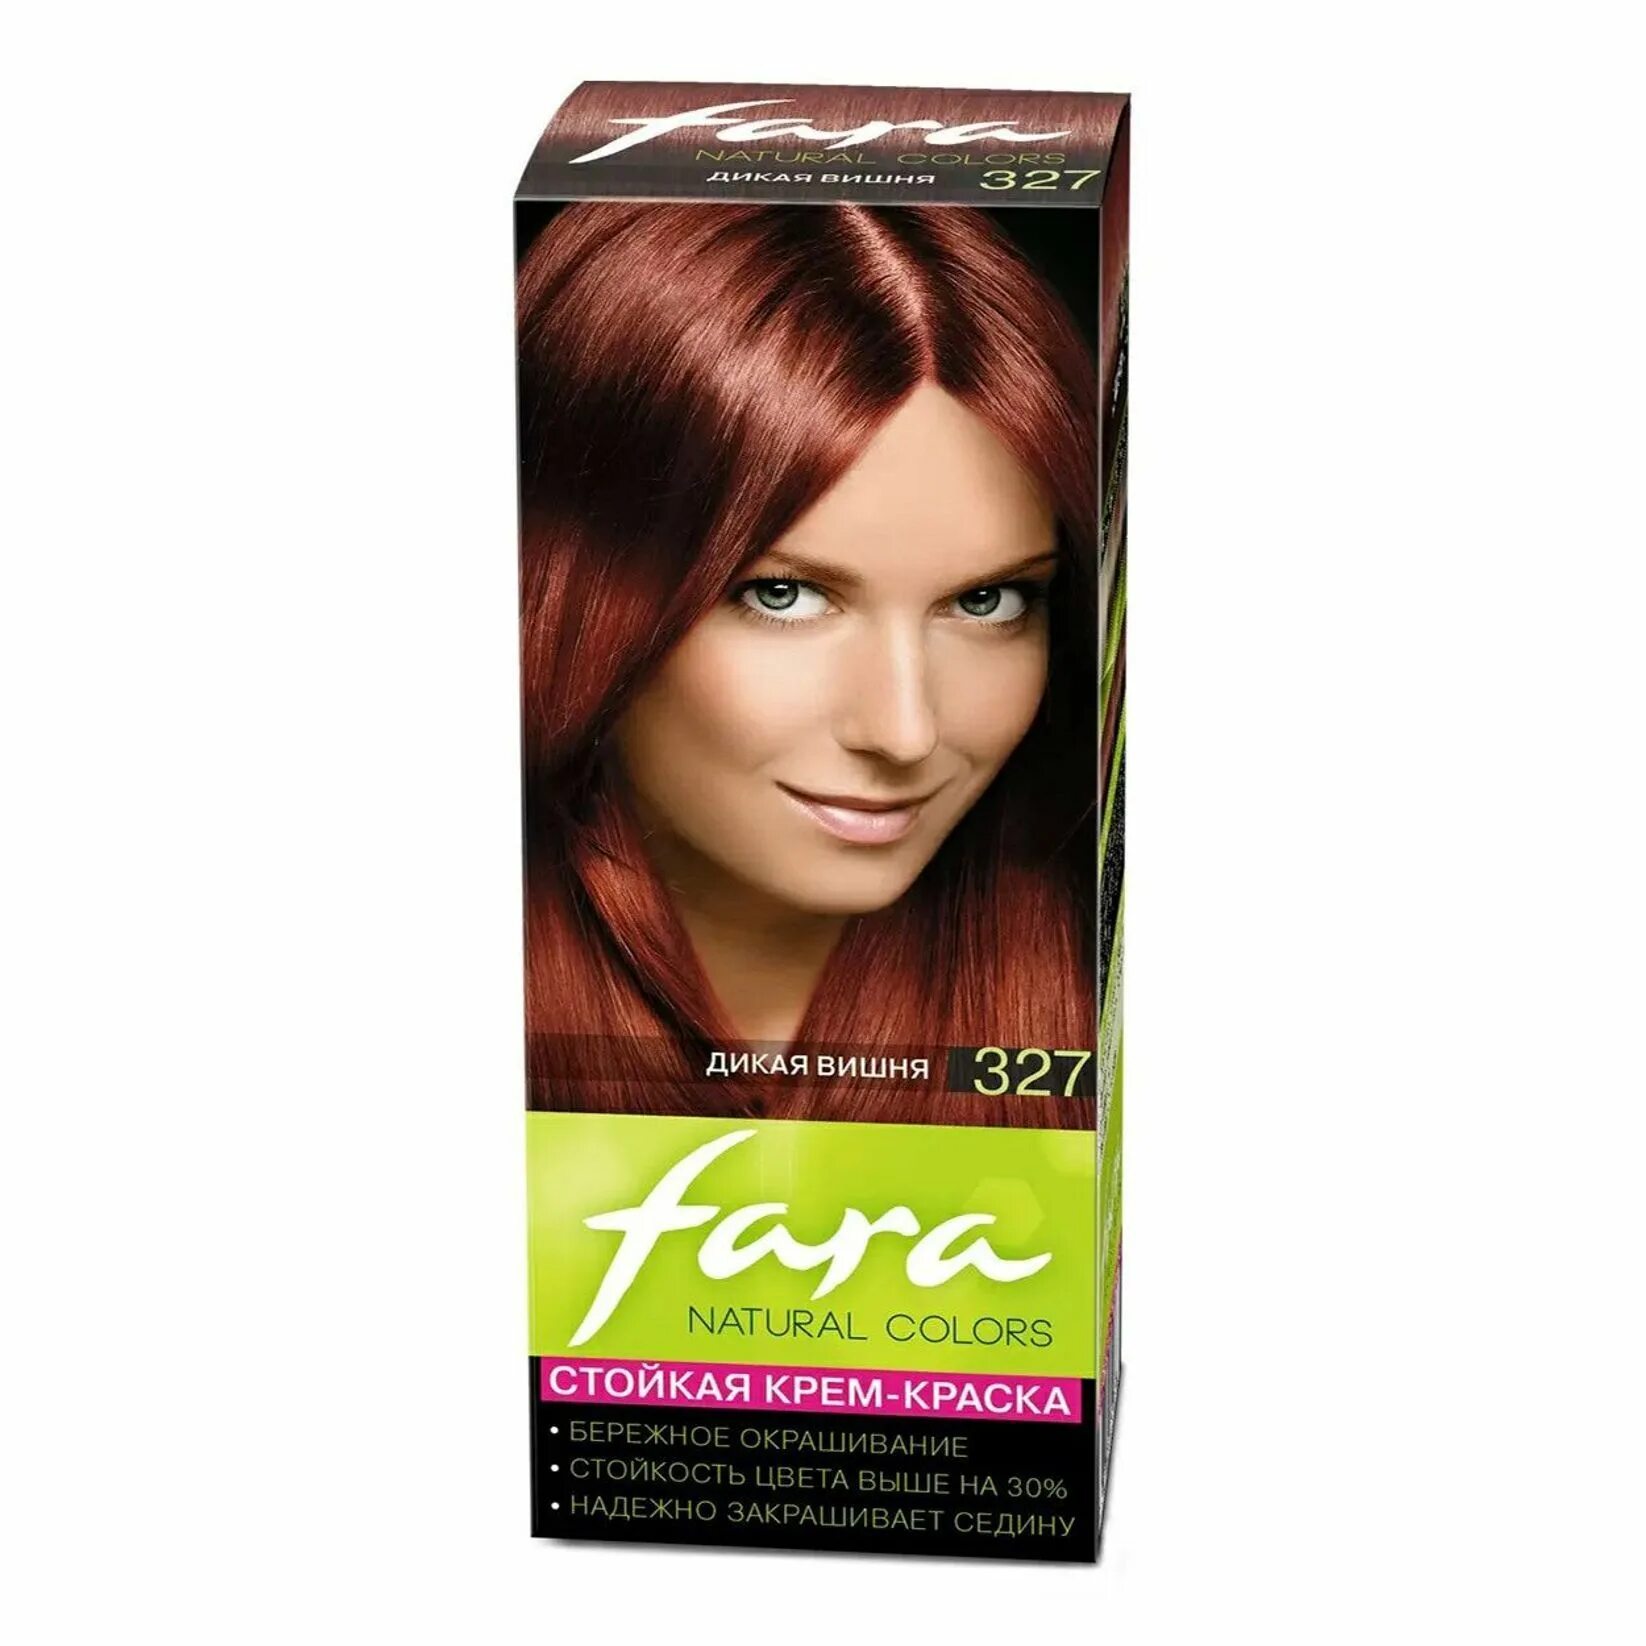 Купить краску вишня. Fara natural Colors краска для волос. Краска для волос фара Дикая вишня. 327 Тон Дикая вишня. Дикая вишня краска для волос.